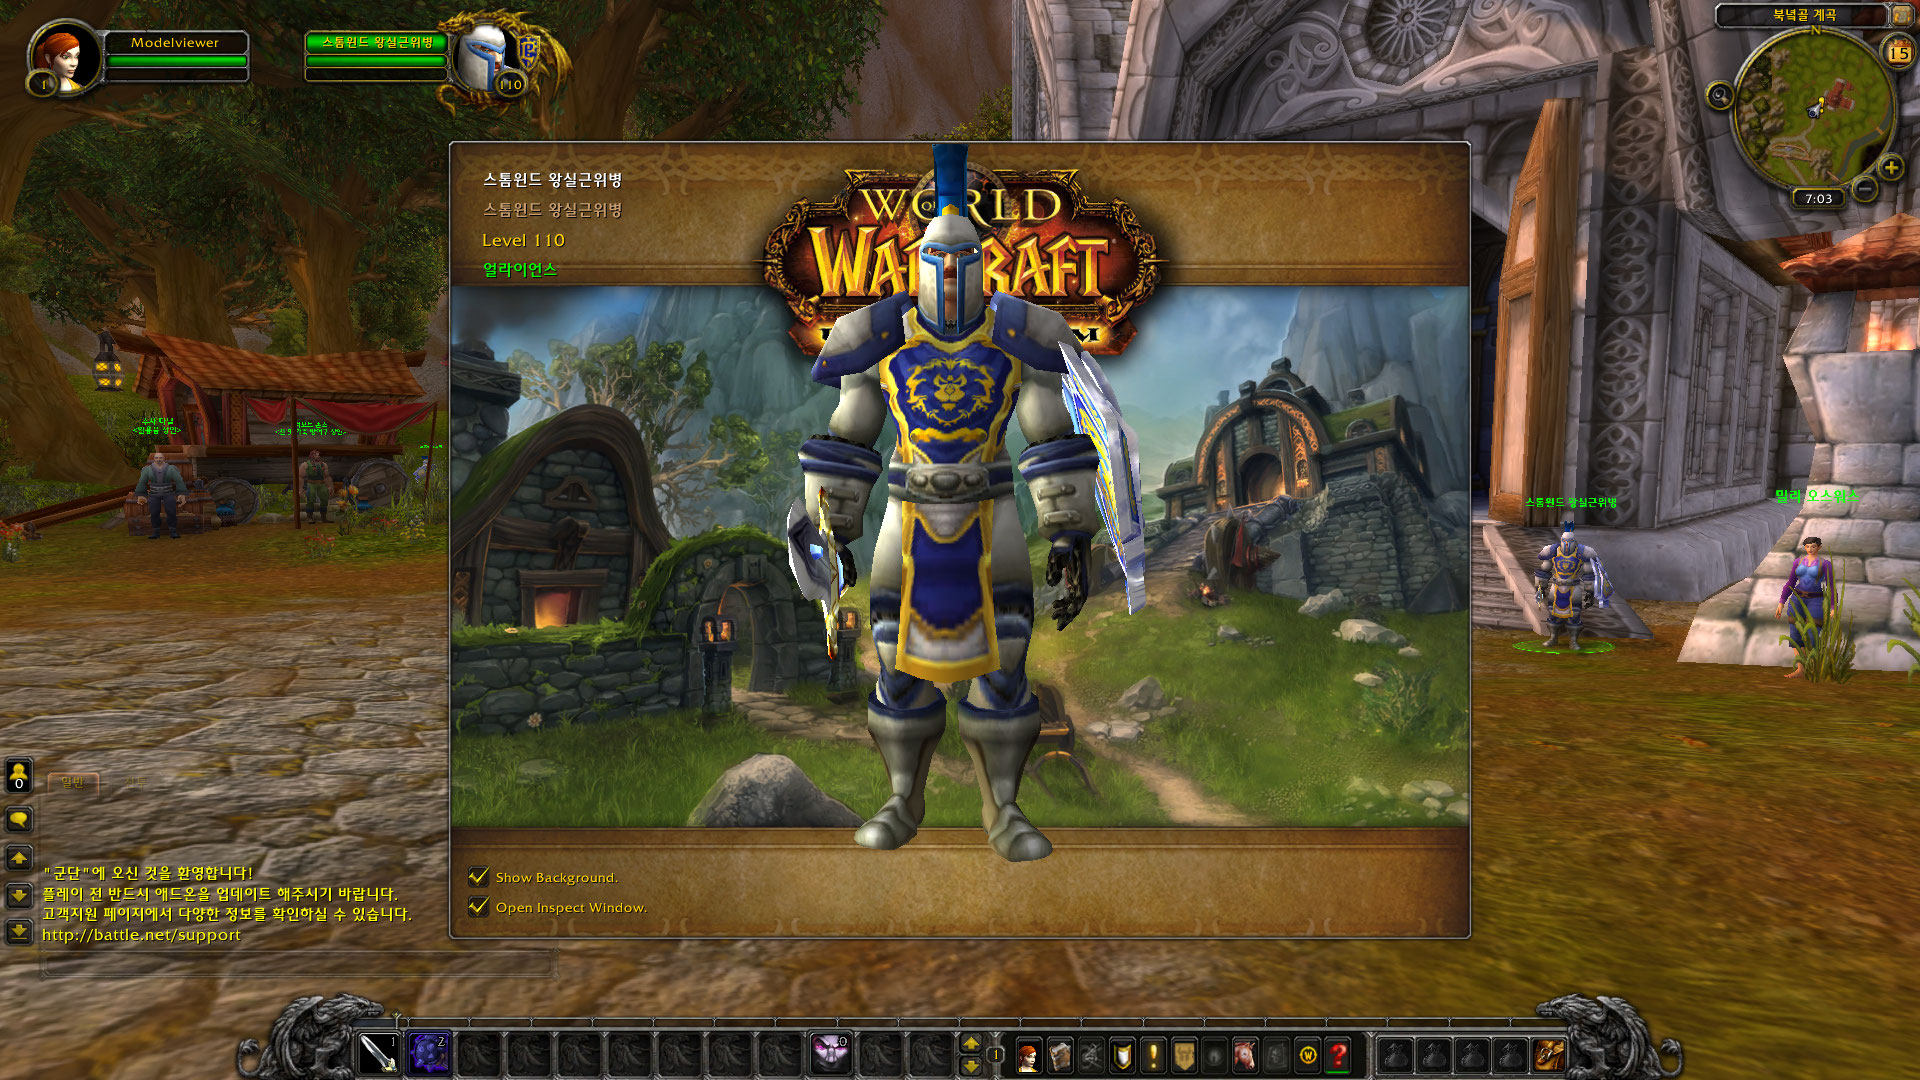 Simulationcraft - World of Warcraft Addons - CurseForge